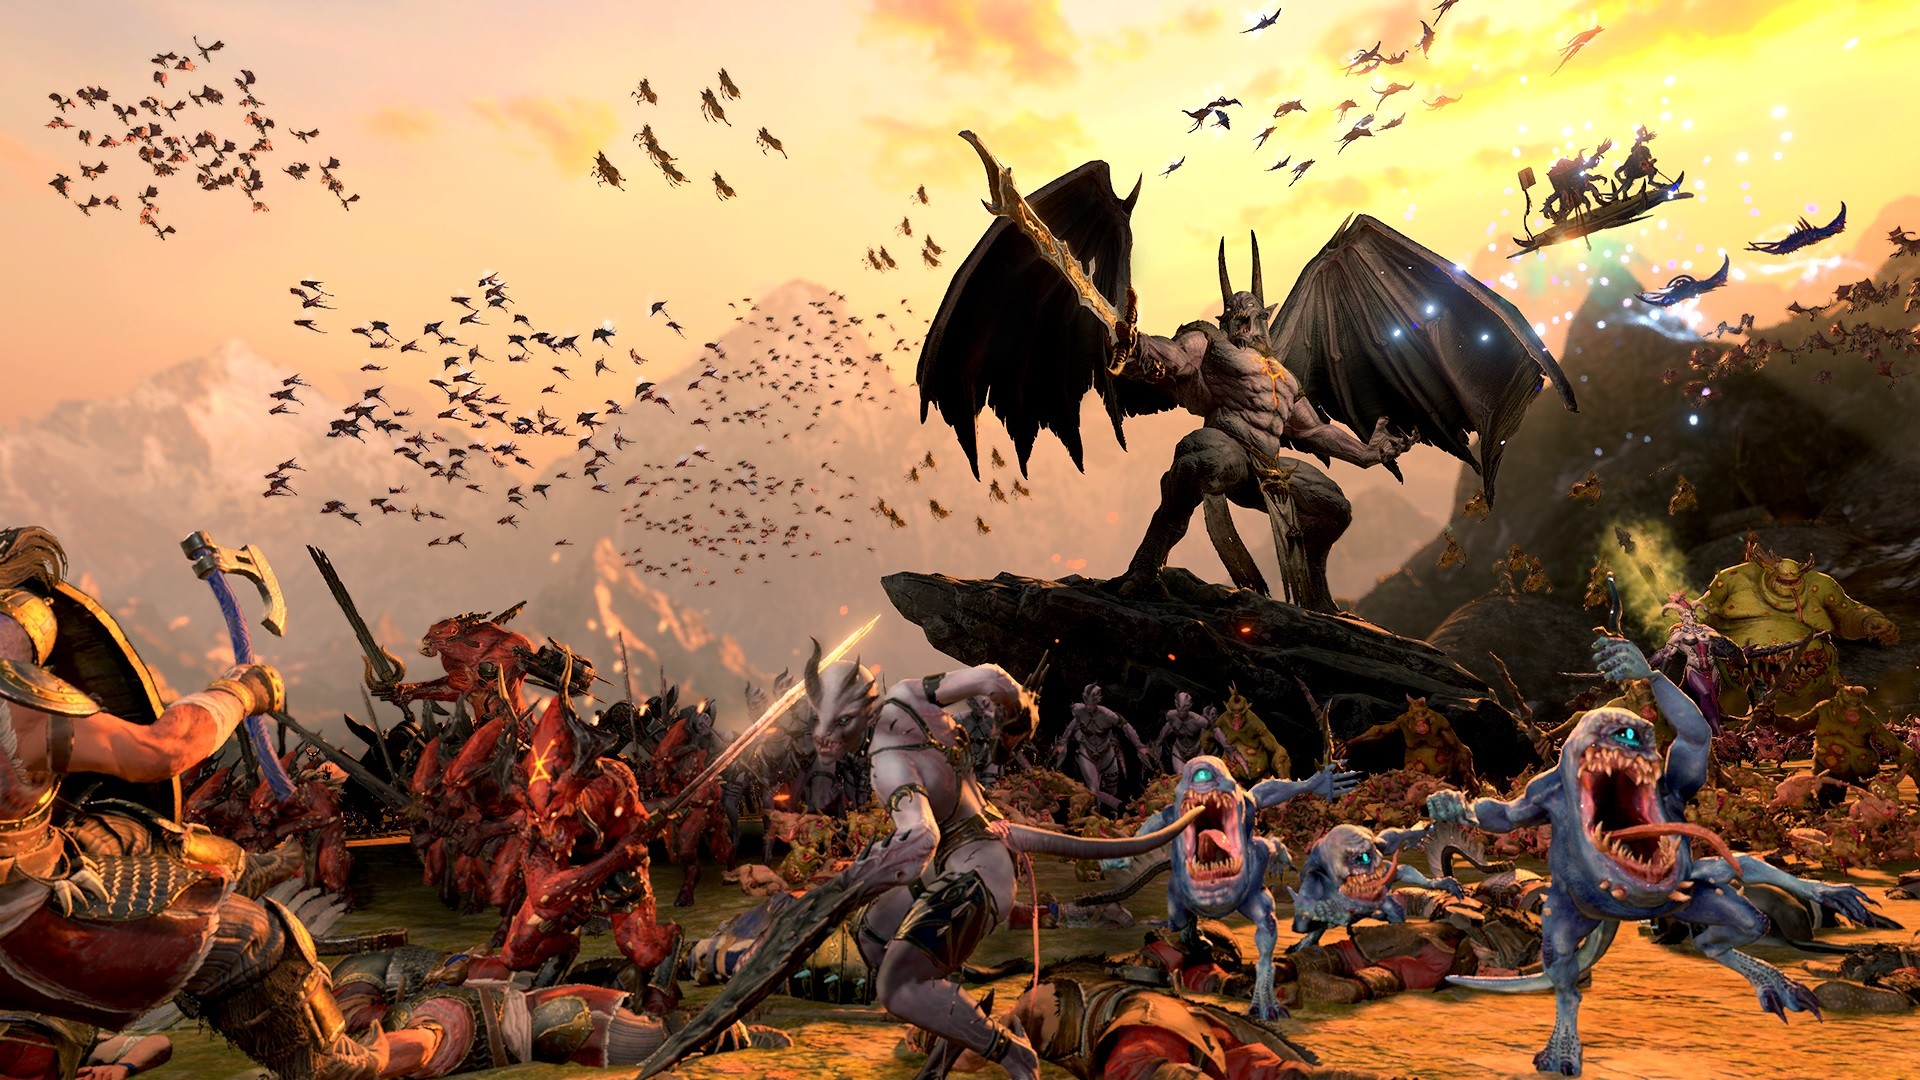 Total War: Warhammer III corruption mechanics trailer details its corruption effects